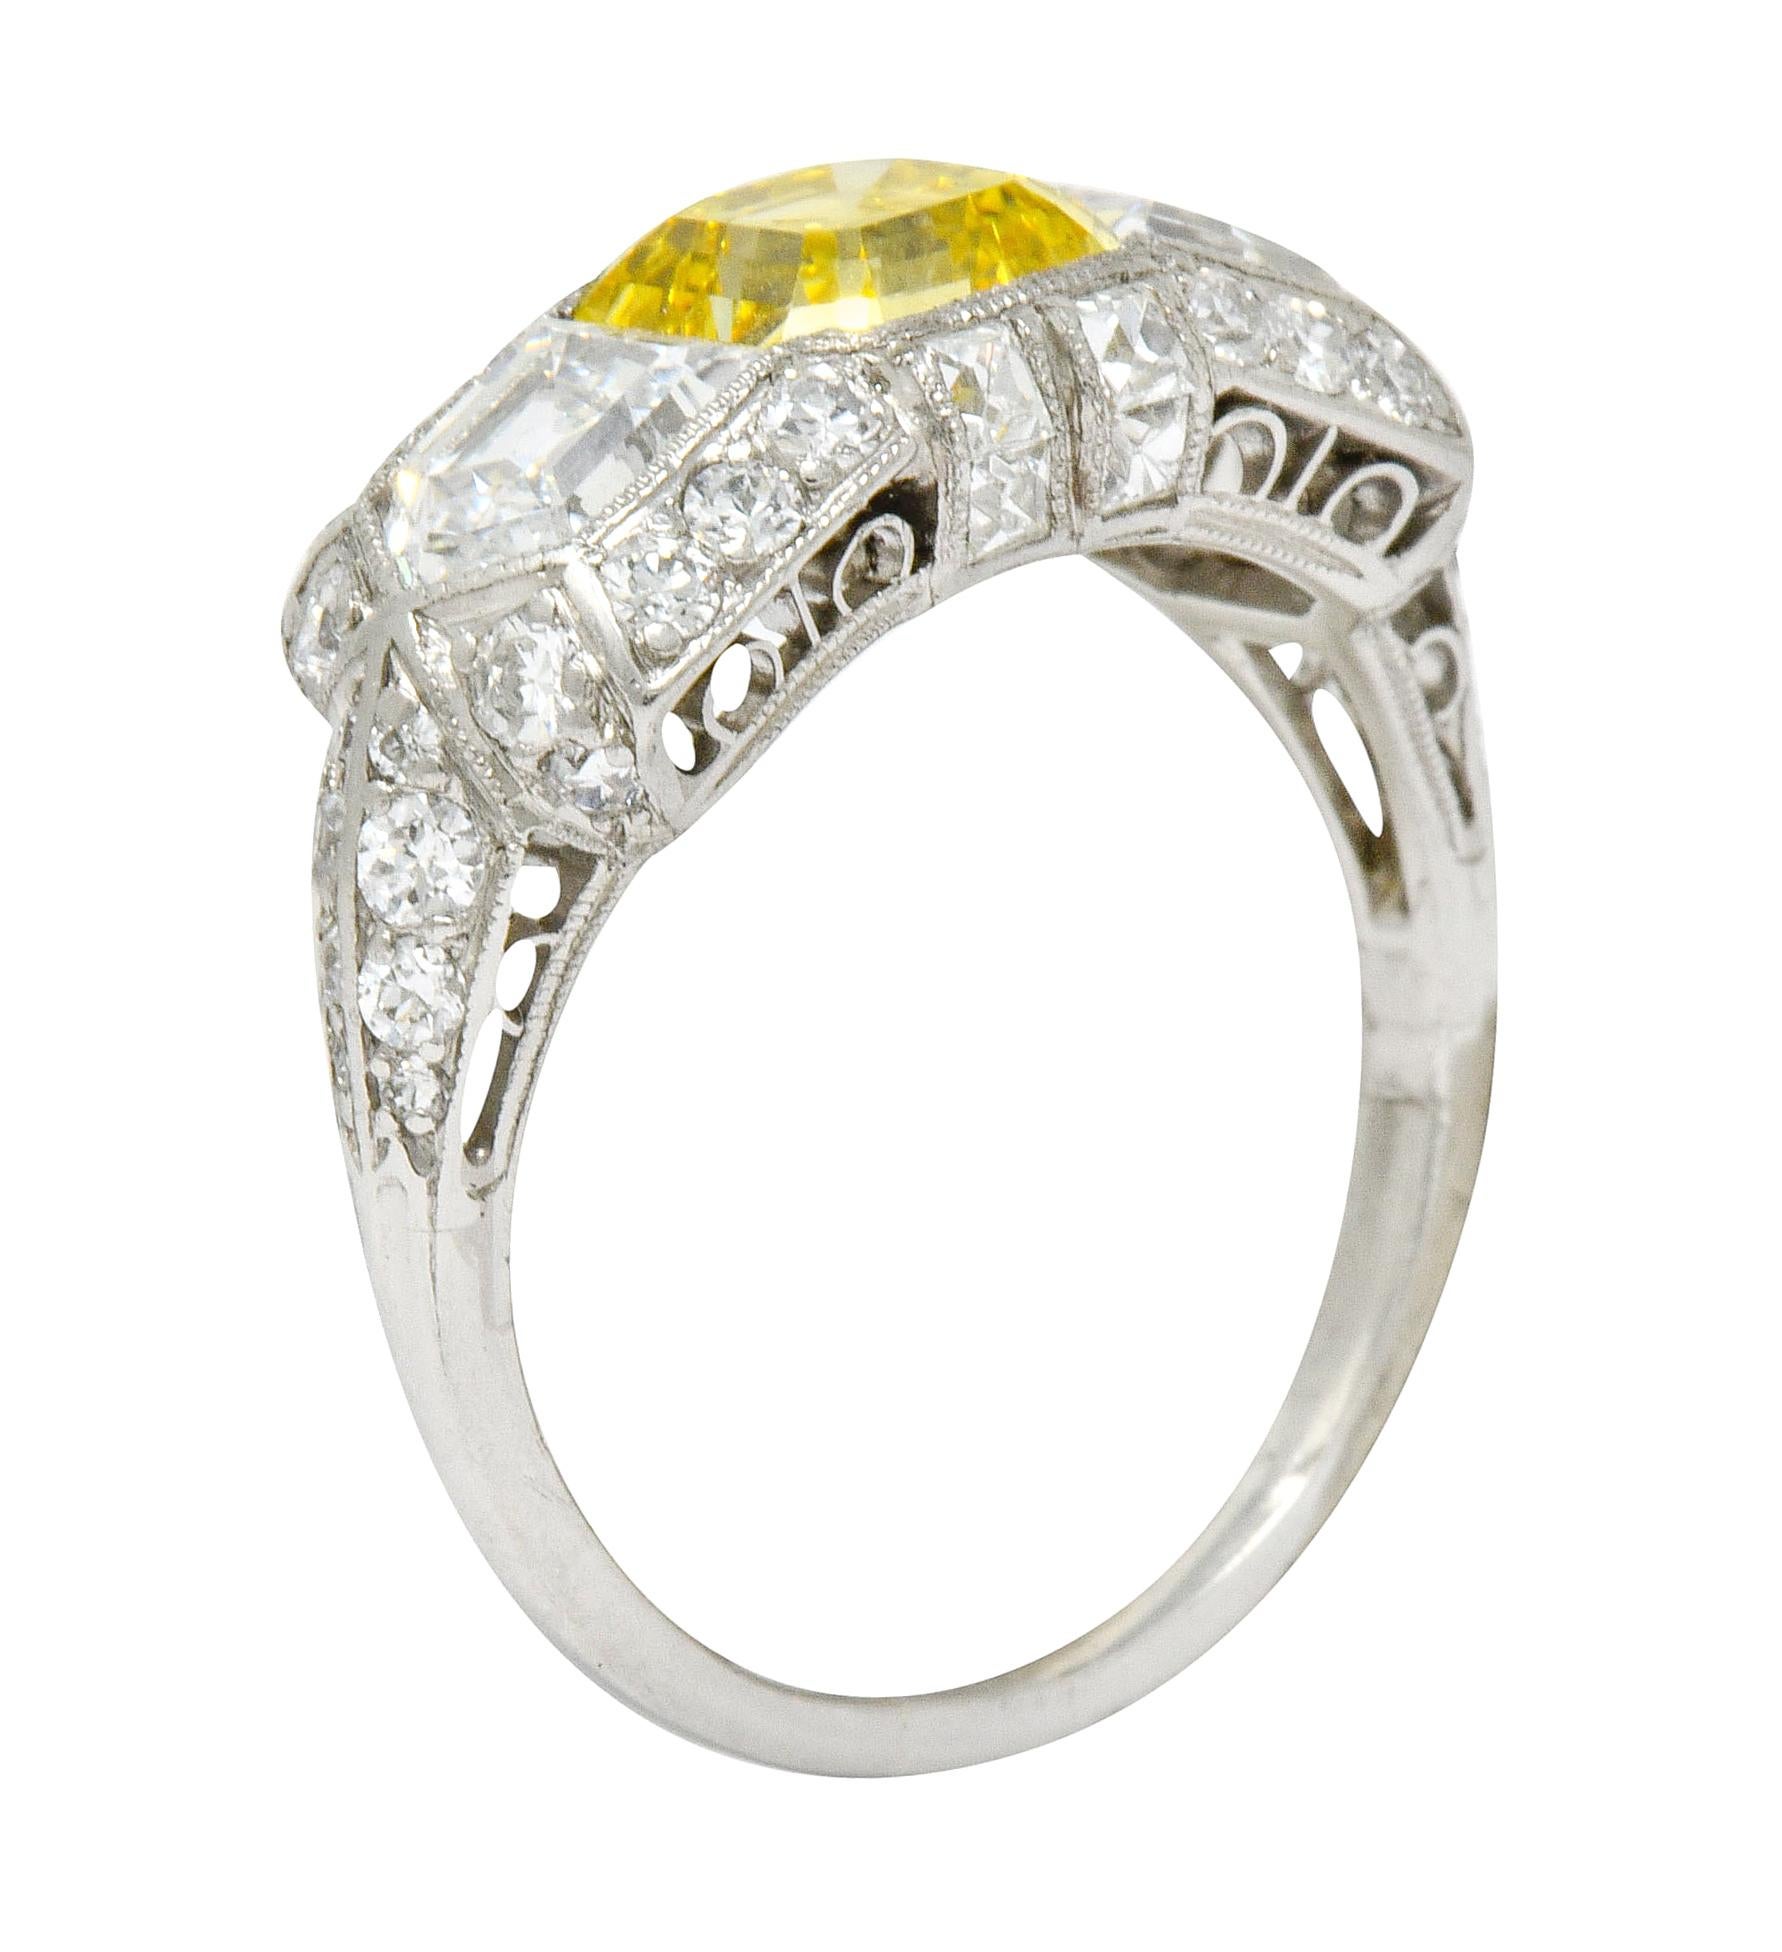 Tiffany & Co. Art Deco Fancy Vivid Yellow Diamond Platinum Cocktail Ring GIA 2